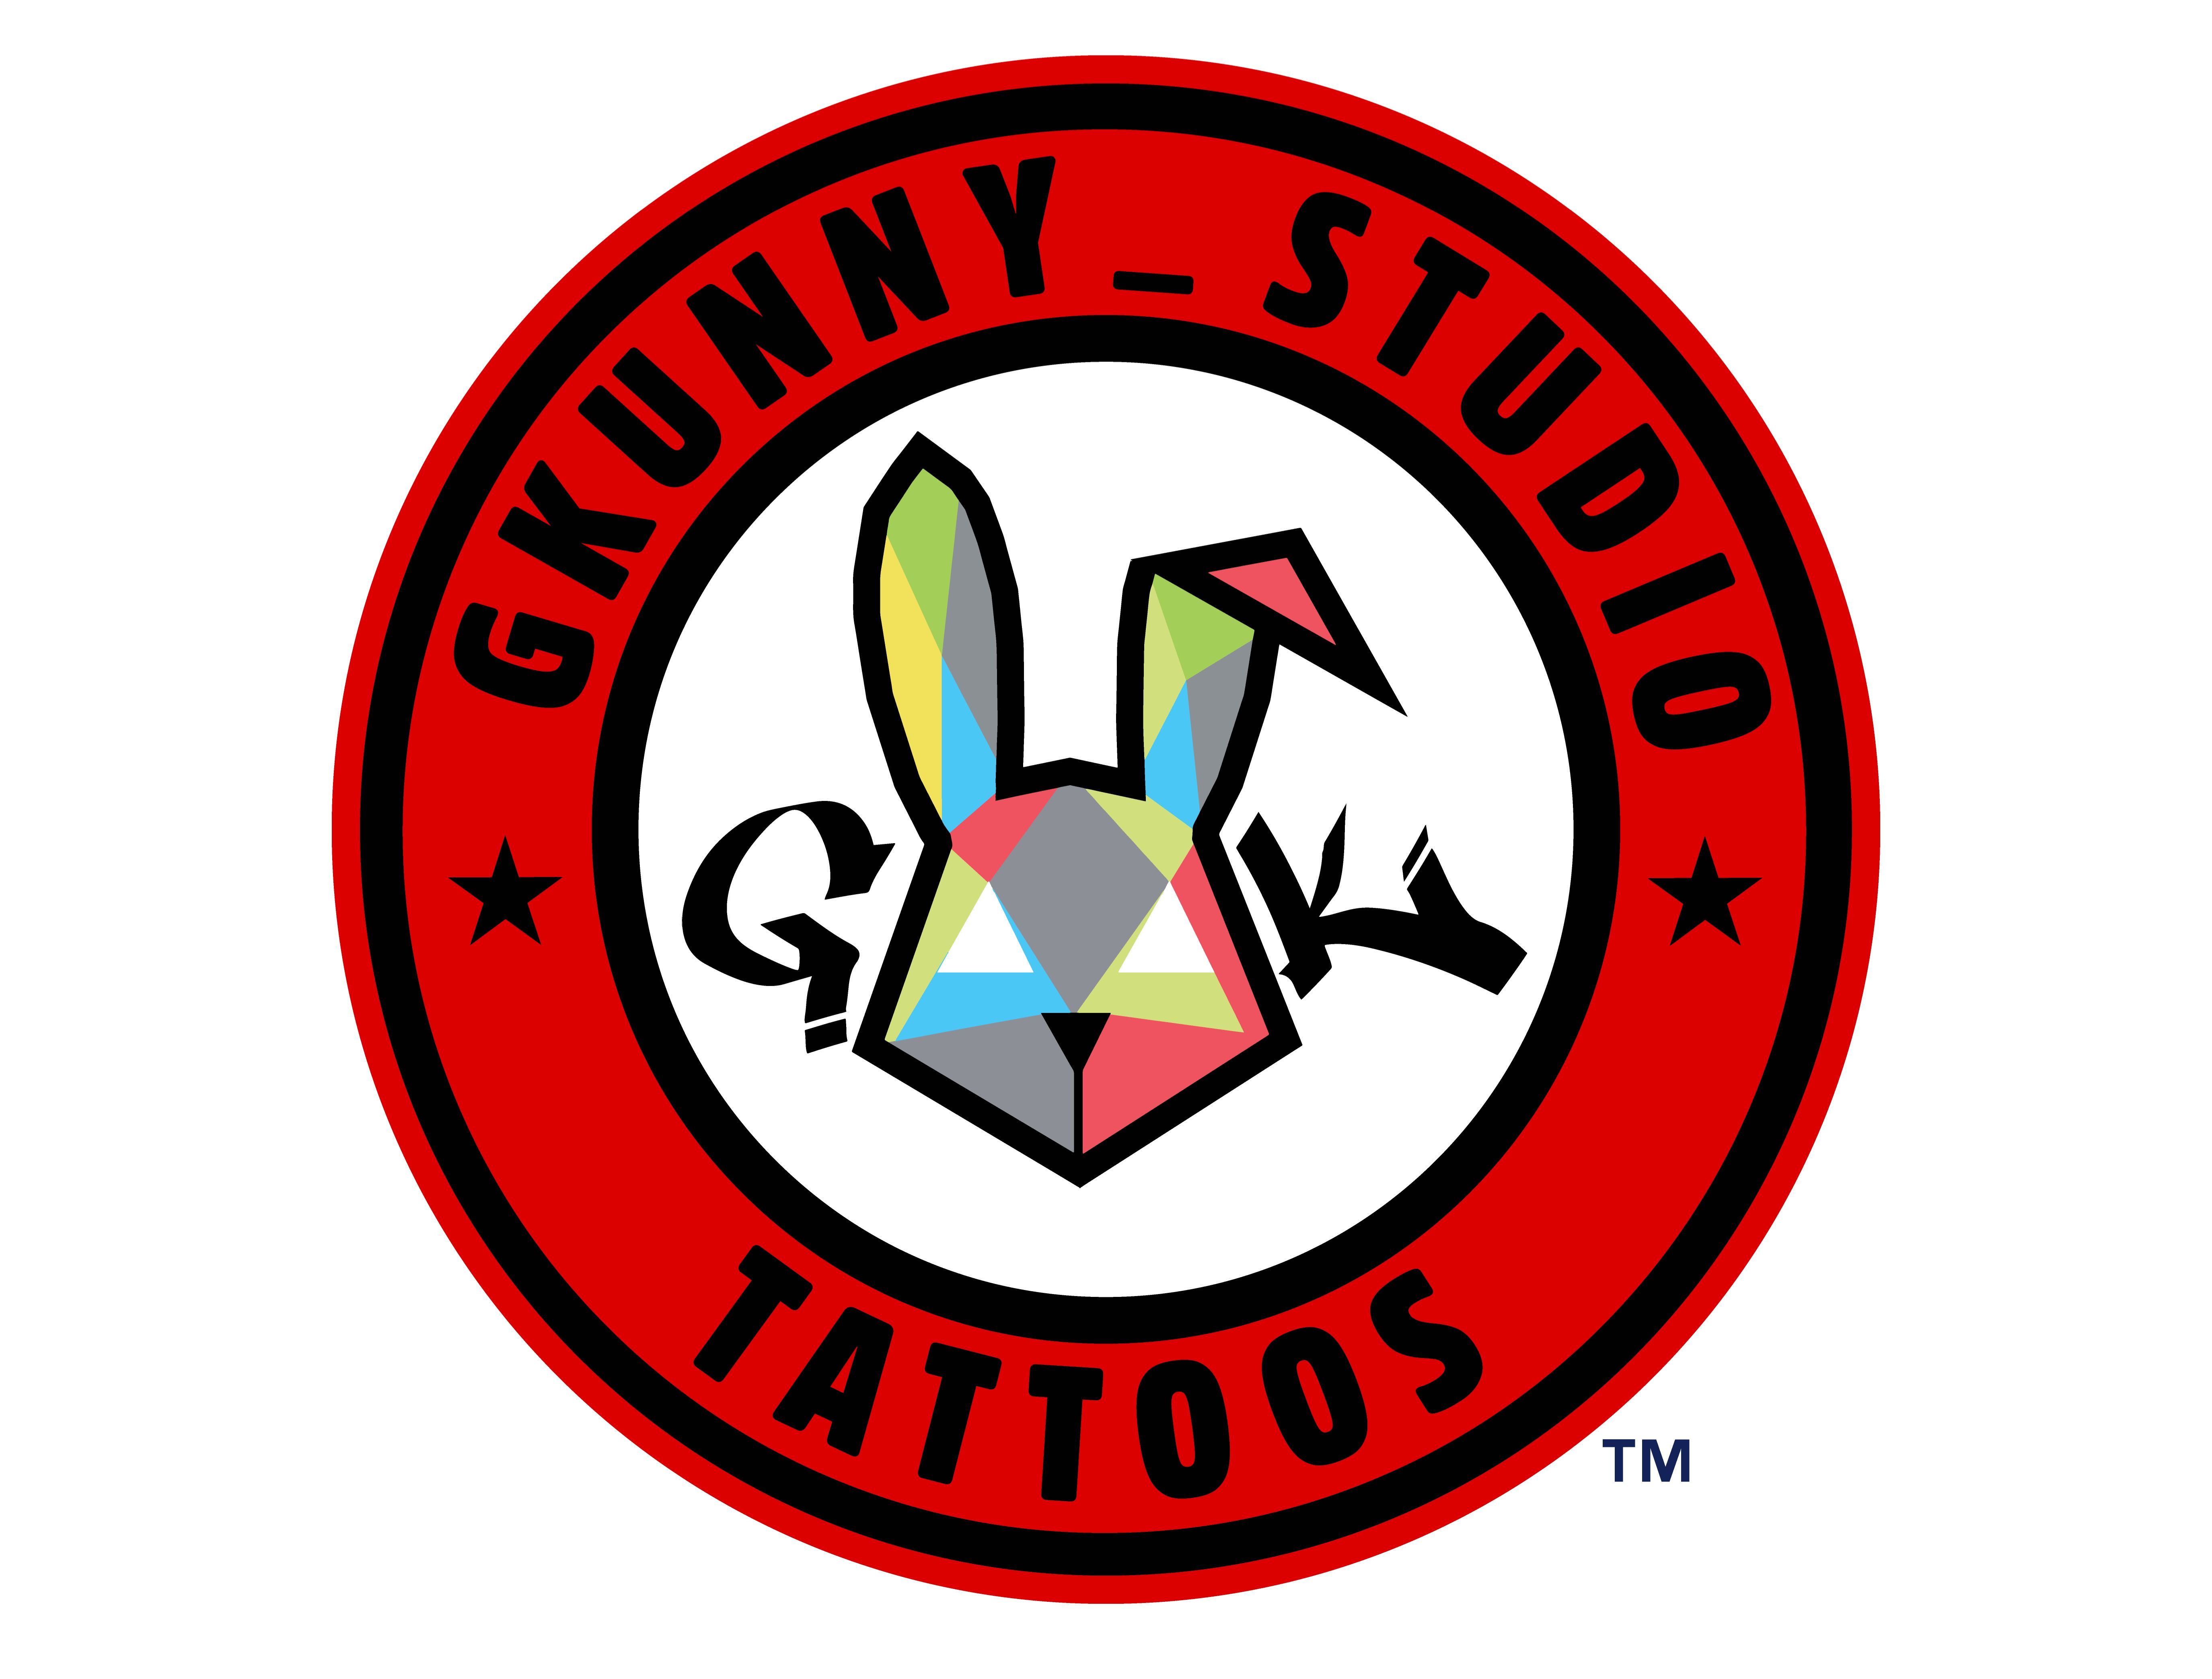 InkedSoul tattoo studio